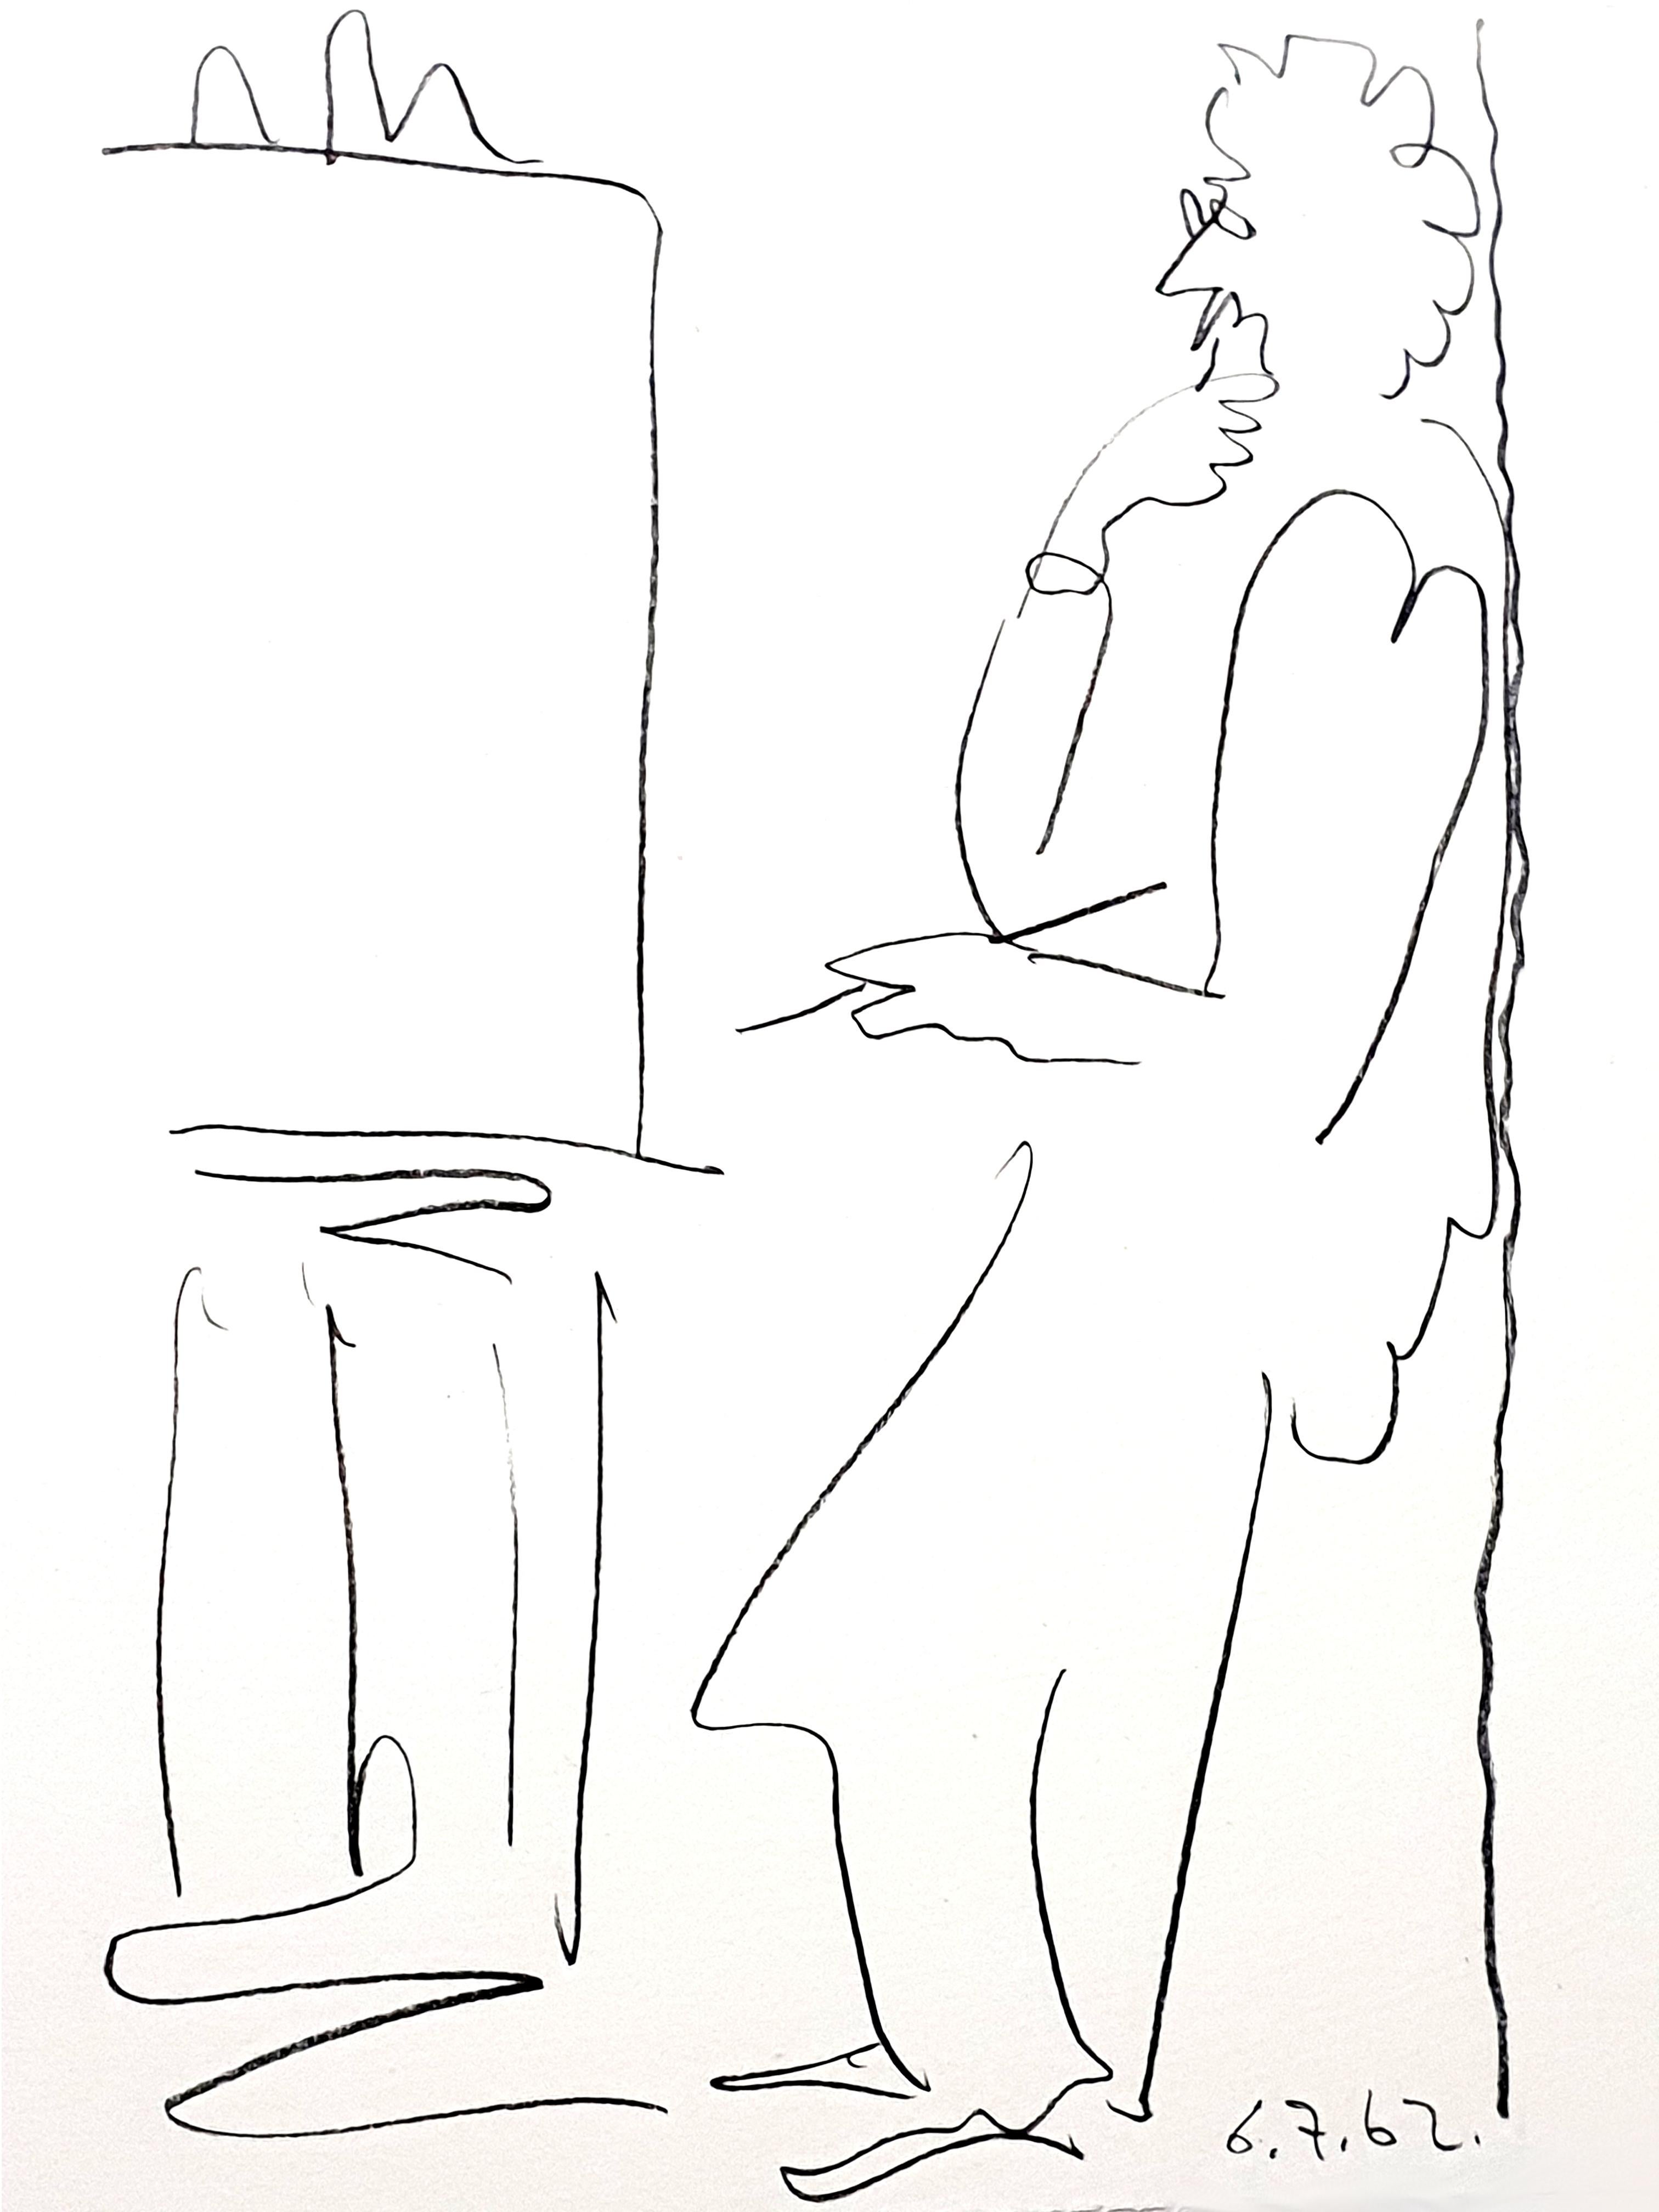 Pablo Picasso - Original Lithograph
Title: Painter and his Model
From the illustrated book "Regards sur Paris" (Paris: André Sauret, 1962)
Edition of 180
Individual prints were not signed
Dimensions: 39 x 30 cm
1962
References: Mourlot 354, Bloch